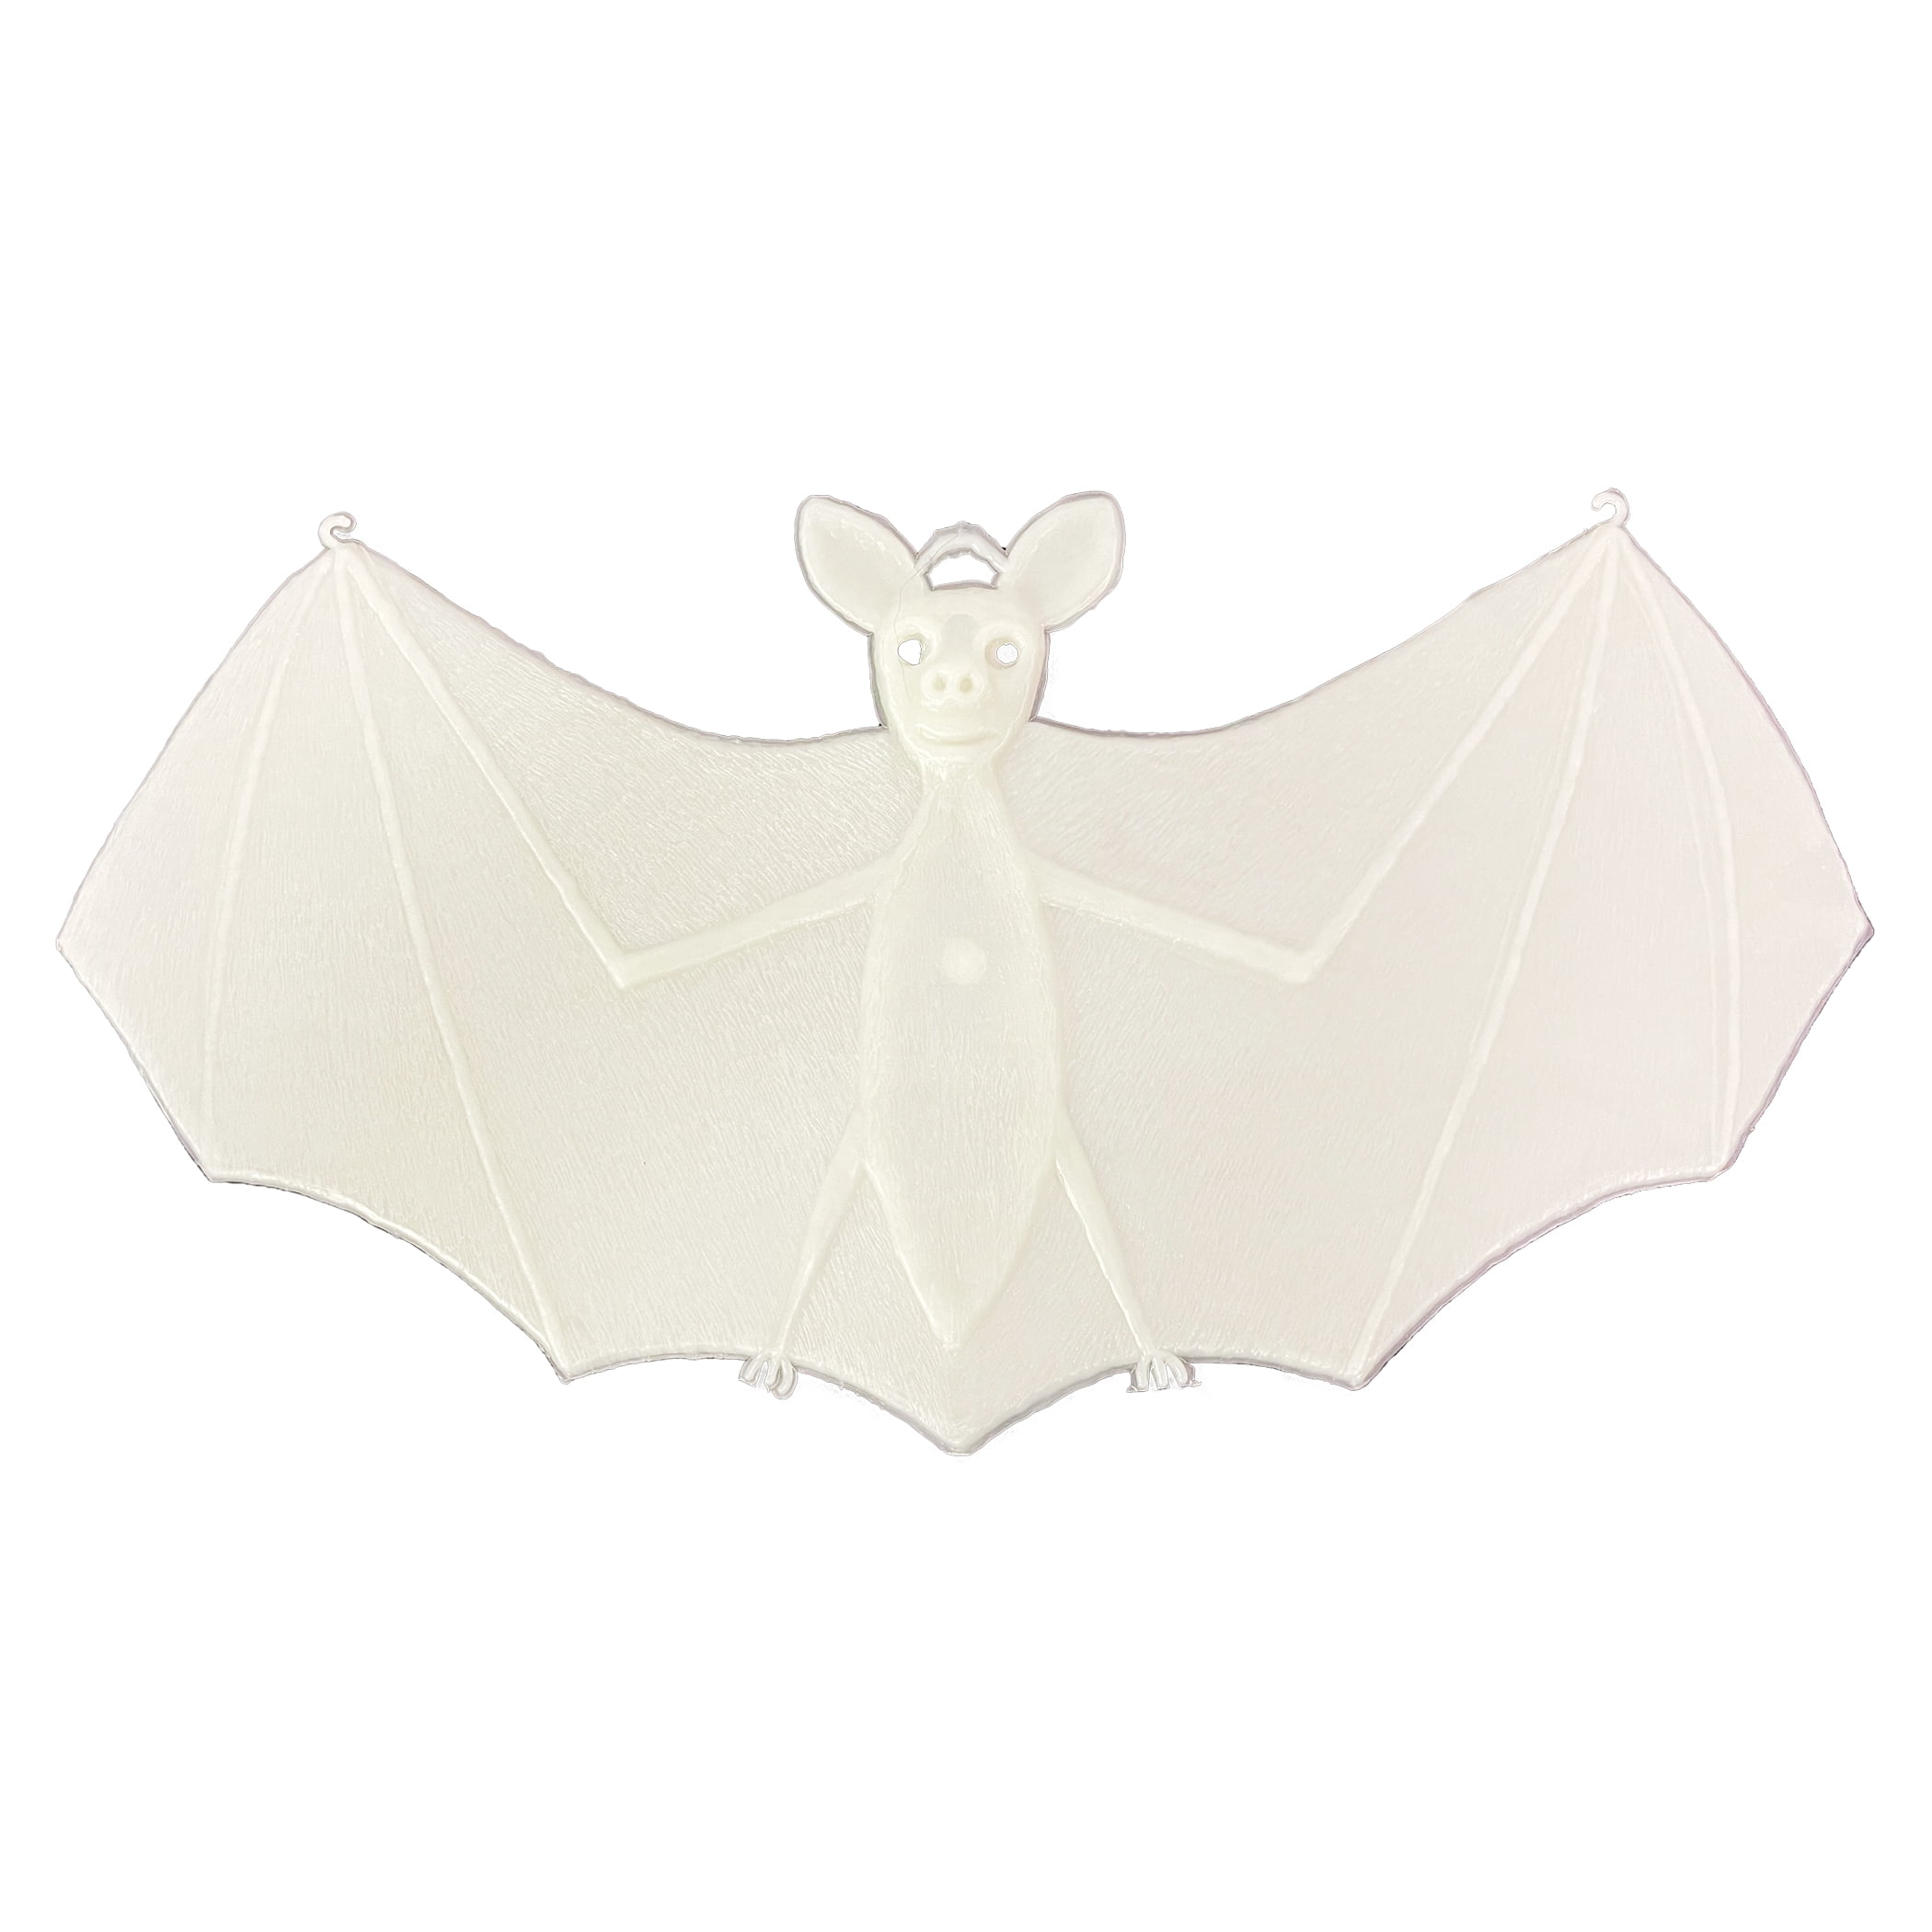 9 Inches Forum Novelties Fake Plastic Bat 